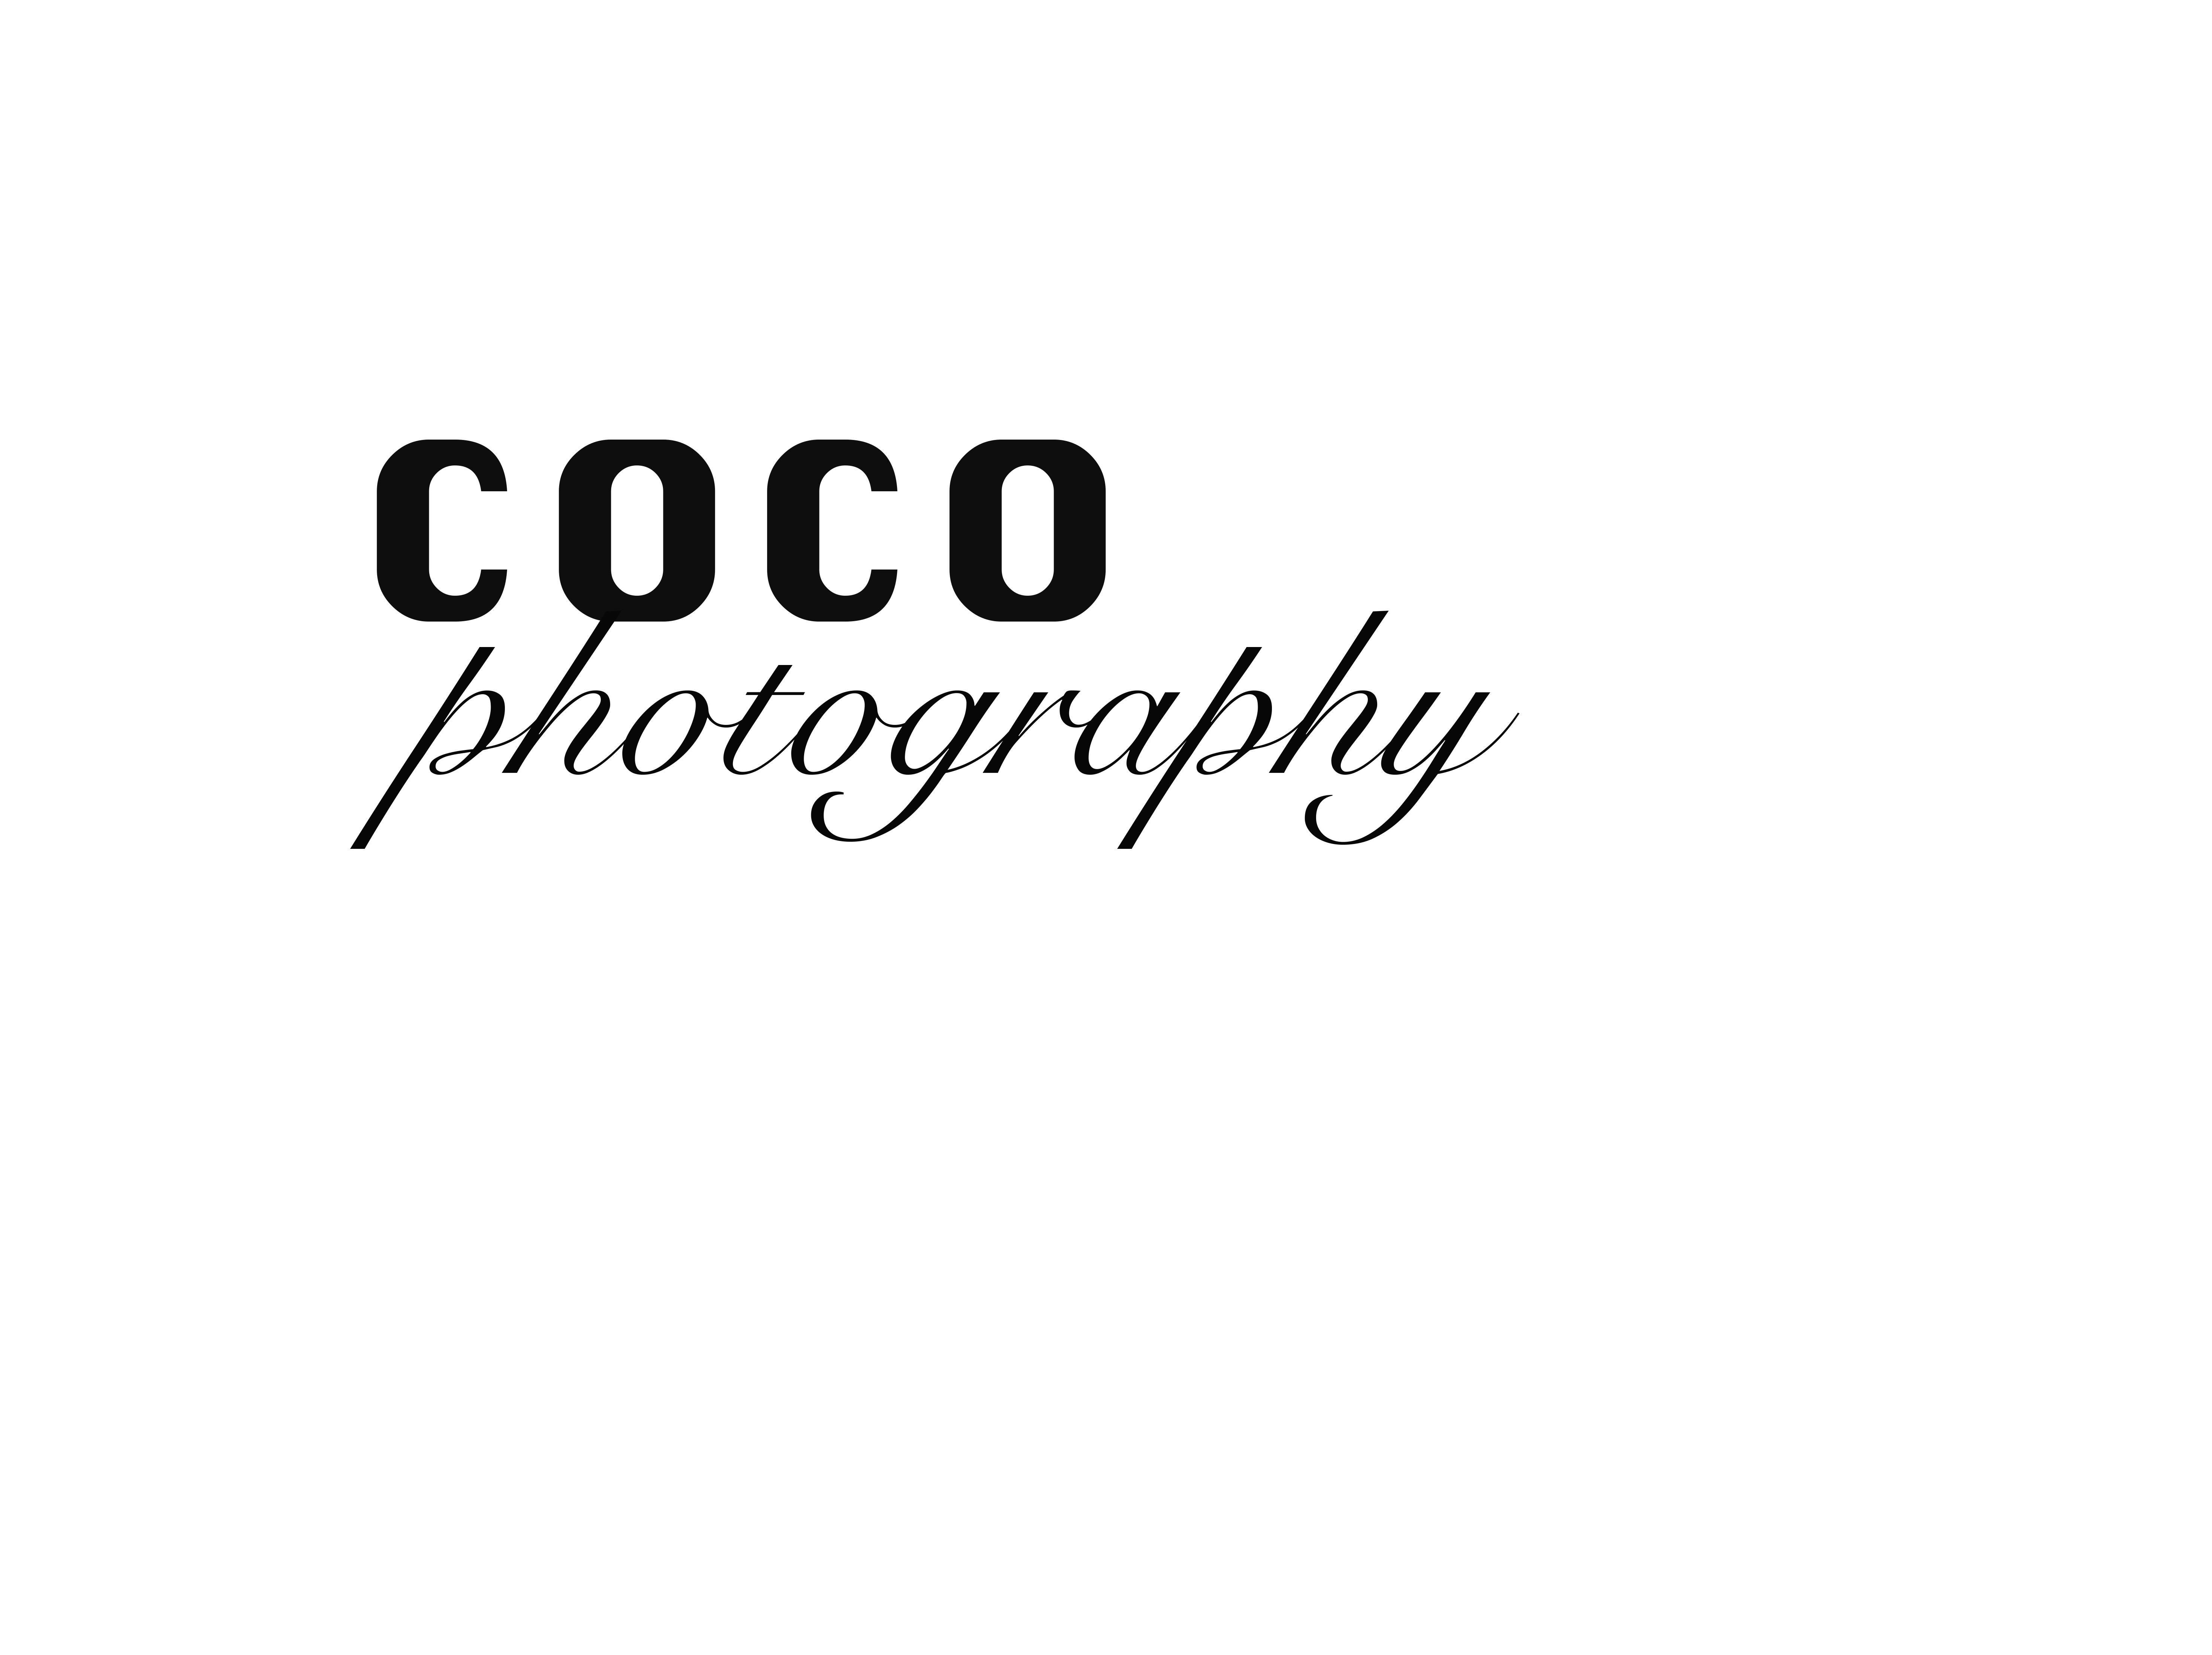 CoCo photography